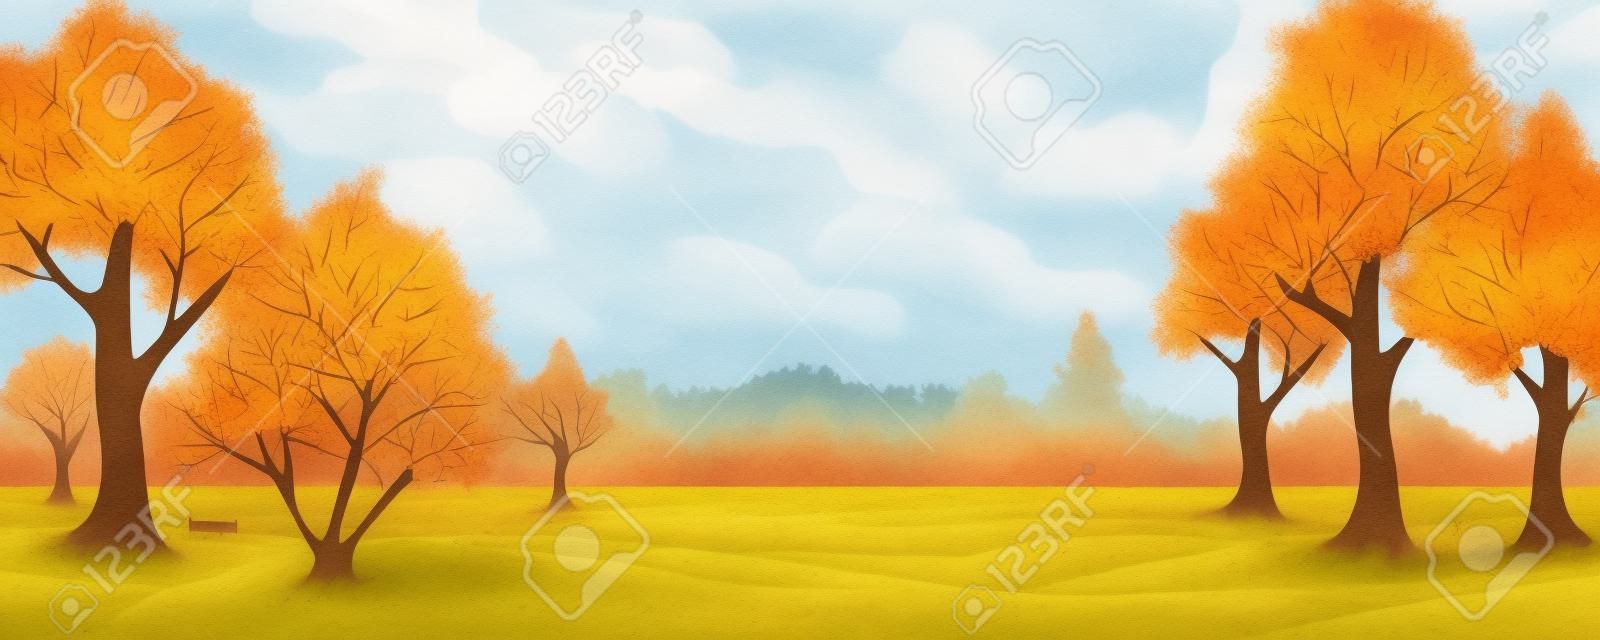 Cartoon illustration of the autumn rural landscape